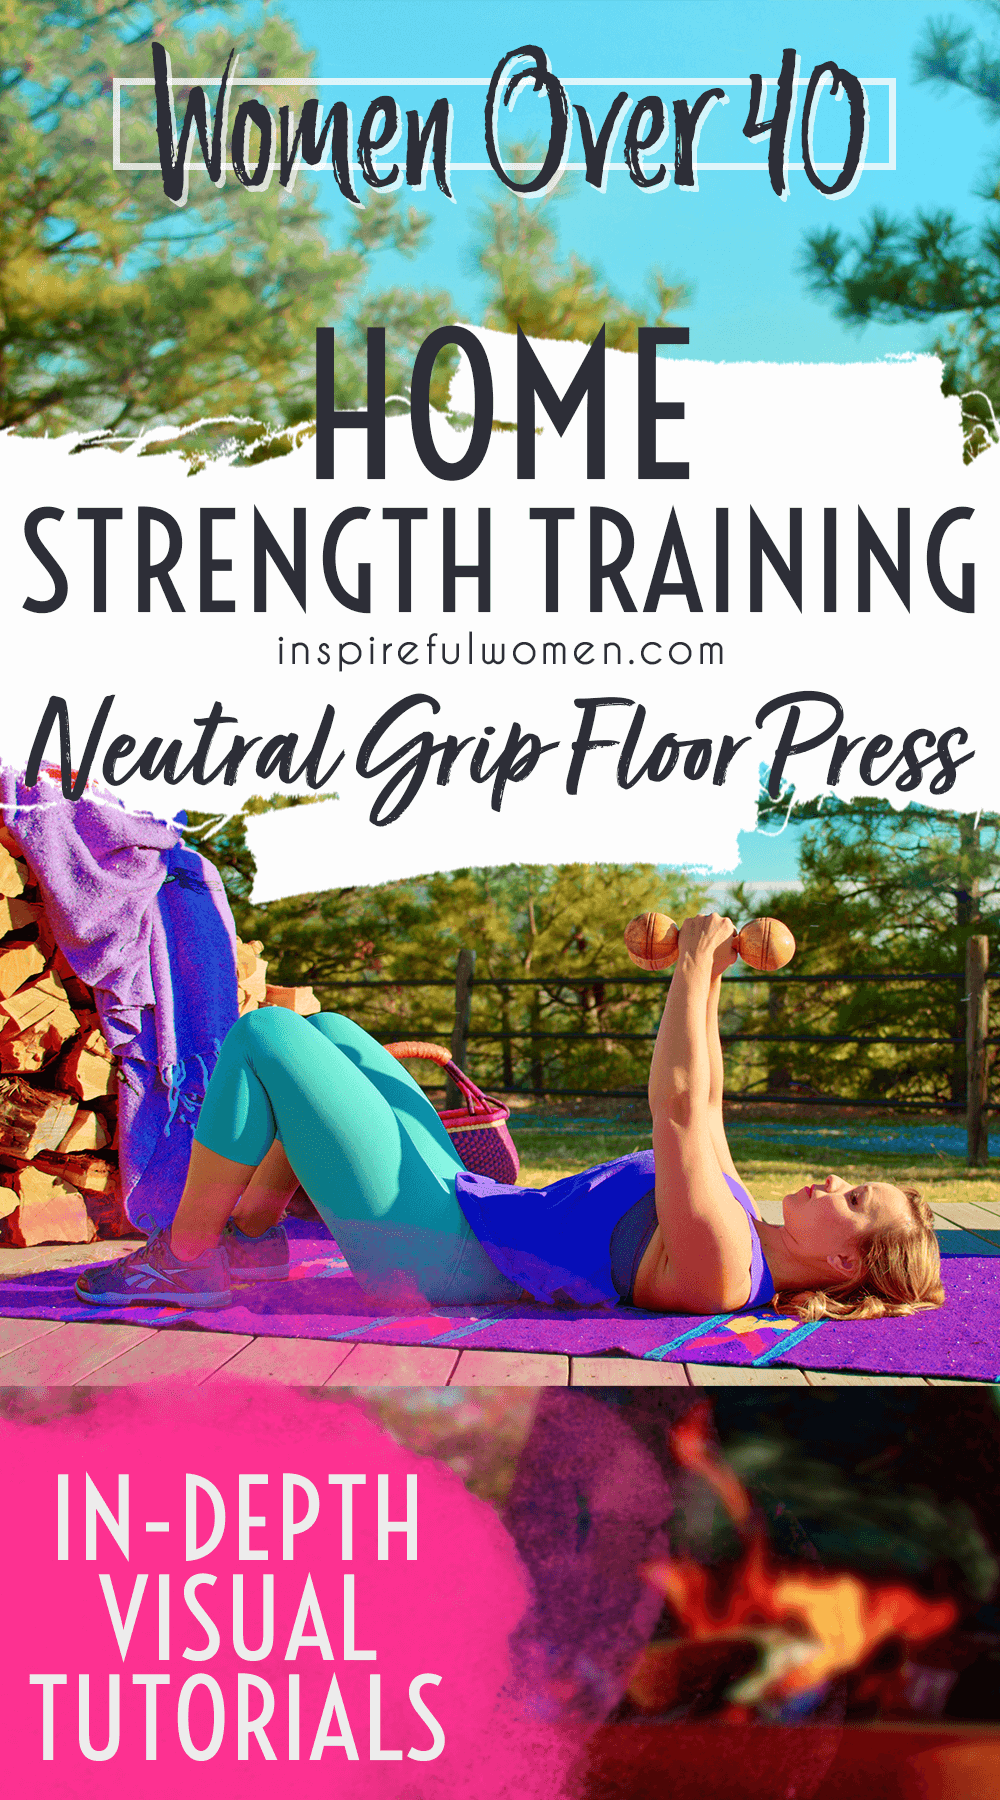 neutral-grip-floor-press-home-strength-training-women-over-40